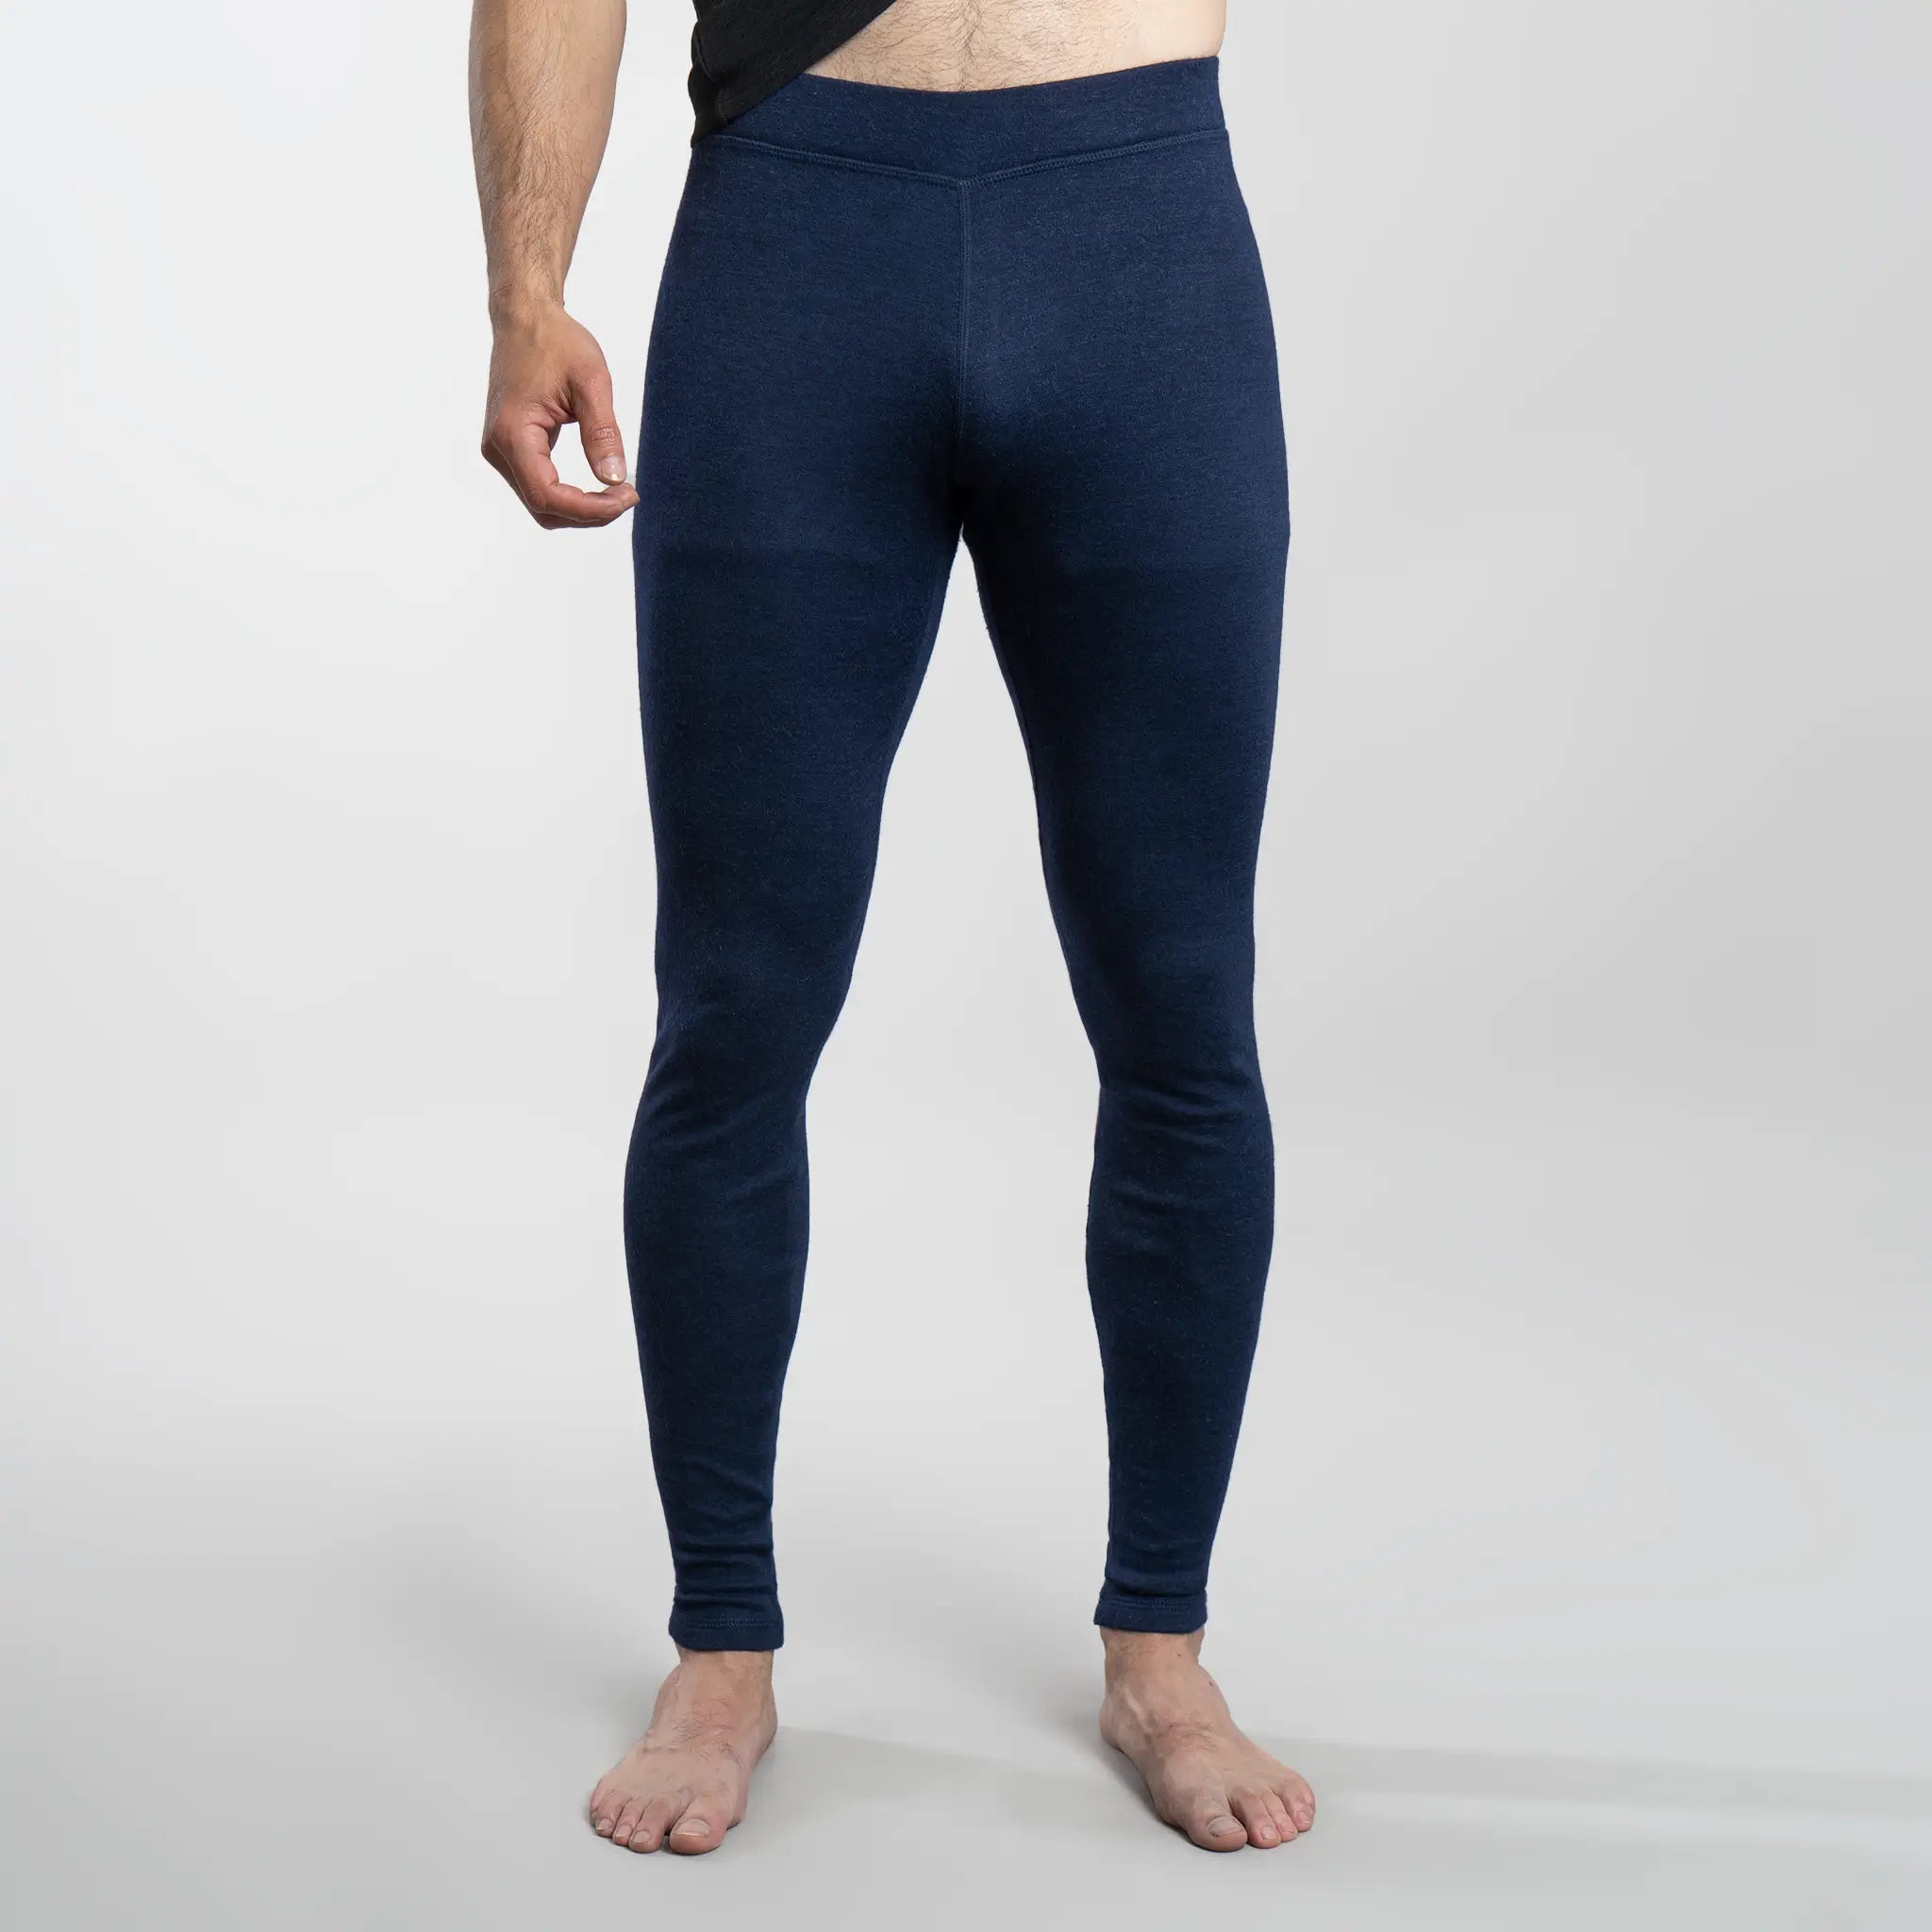 83280GD - Garment Dye Legging | Outfits with leggings, Cotton spandex  leggings, Best leggings